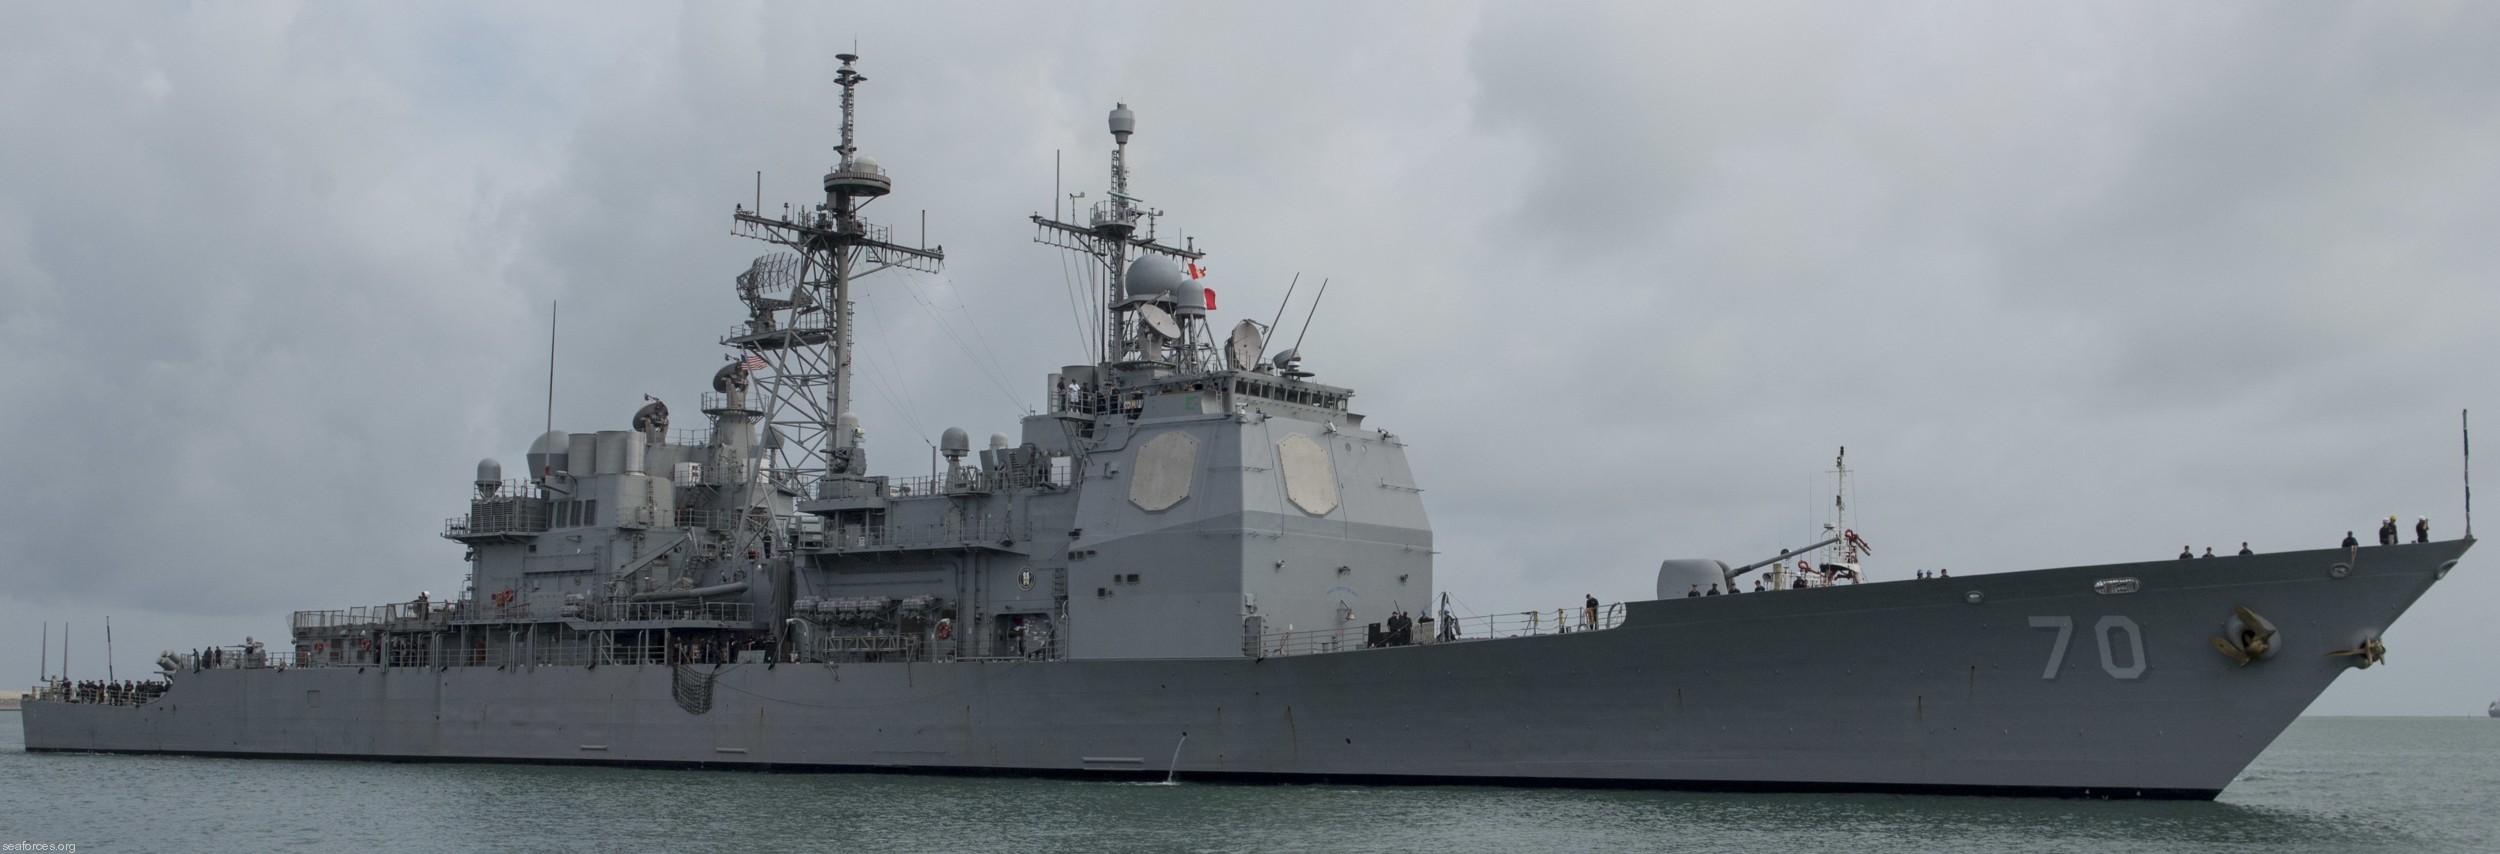 cg-70 uss lake erie ticonderoga class guided missile cruiser navy 99